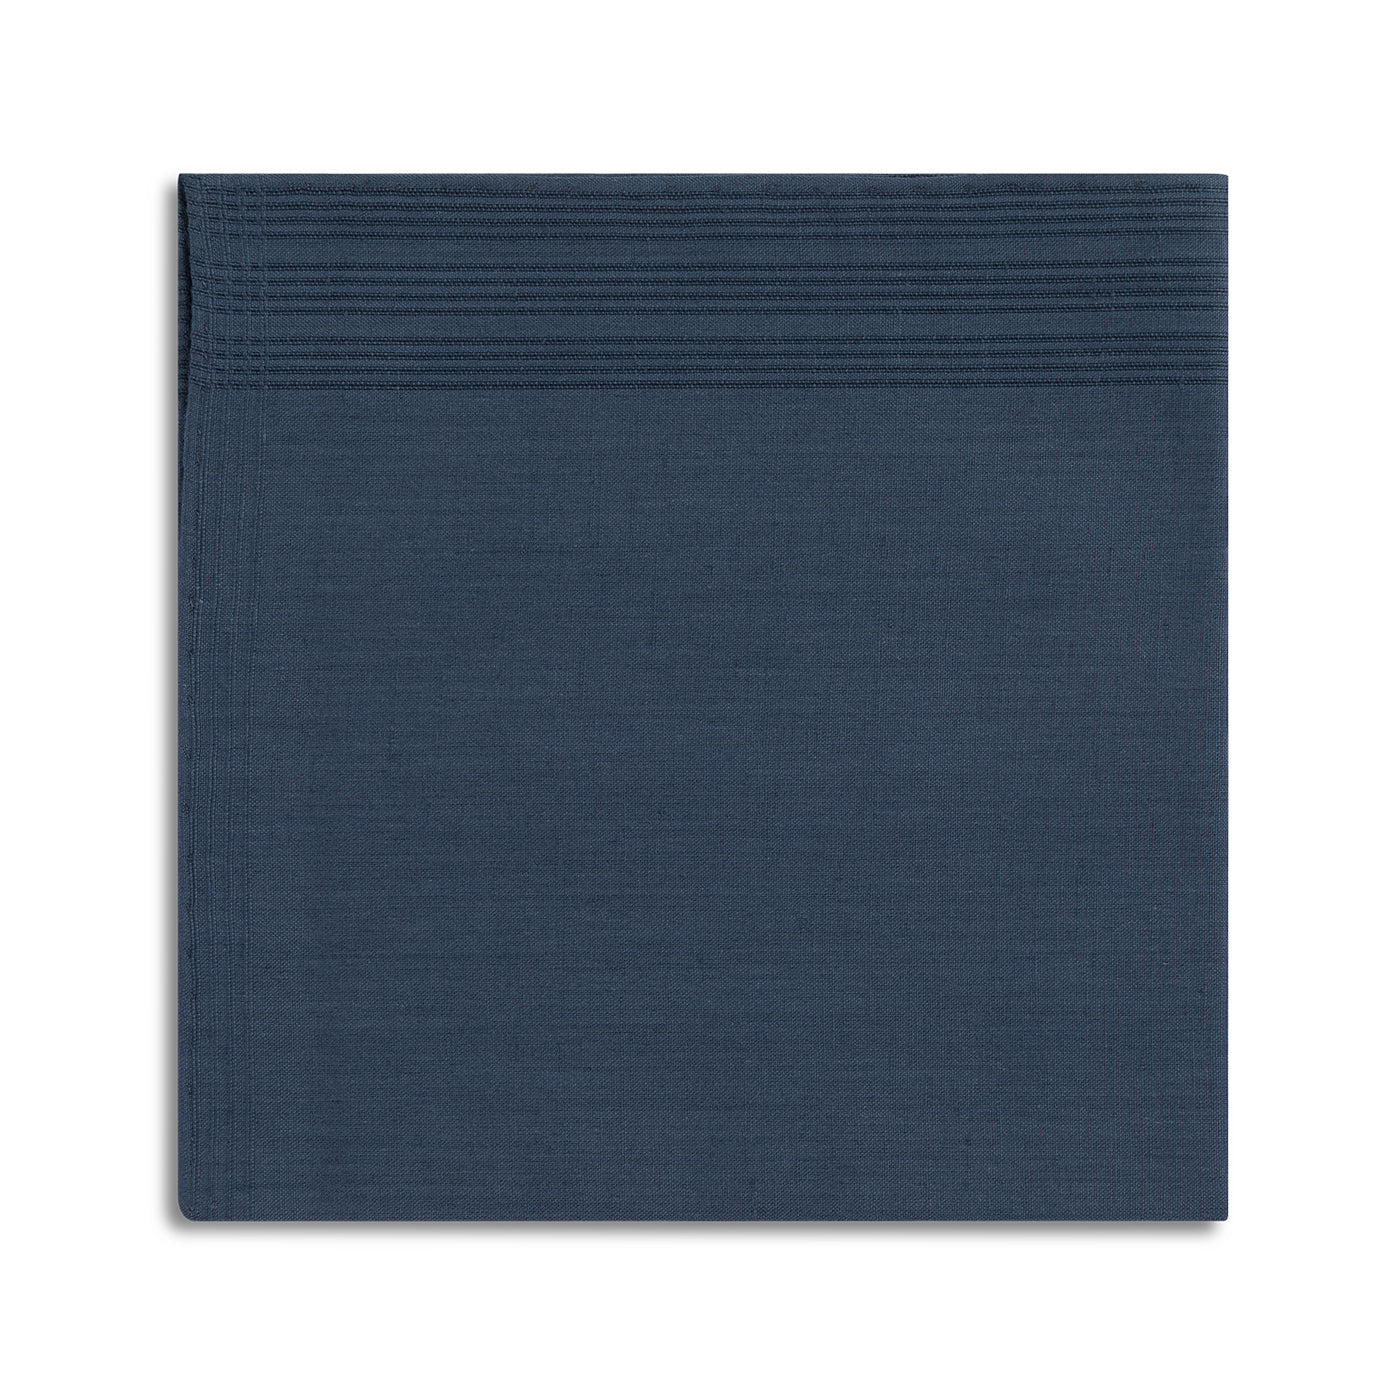 Simonnot Godard "Vicq" Pocket Square in Denim Blue